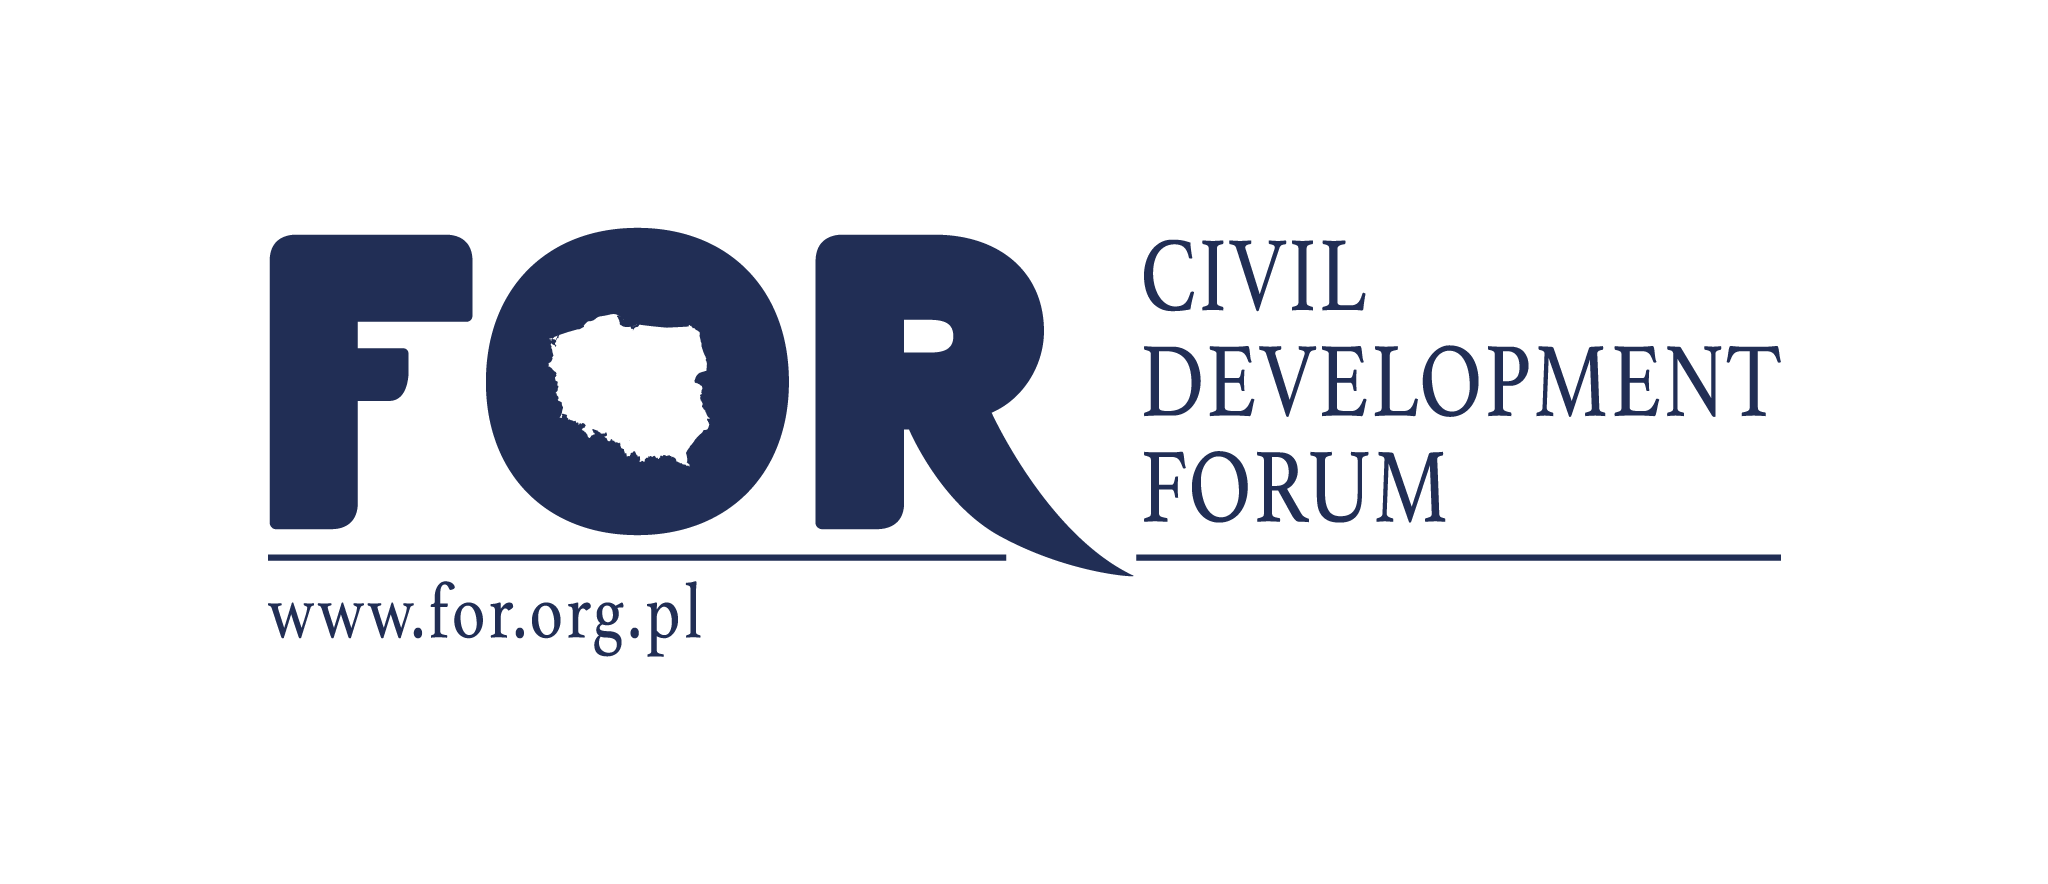 Civil Development Forum Foundation (FOR) 